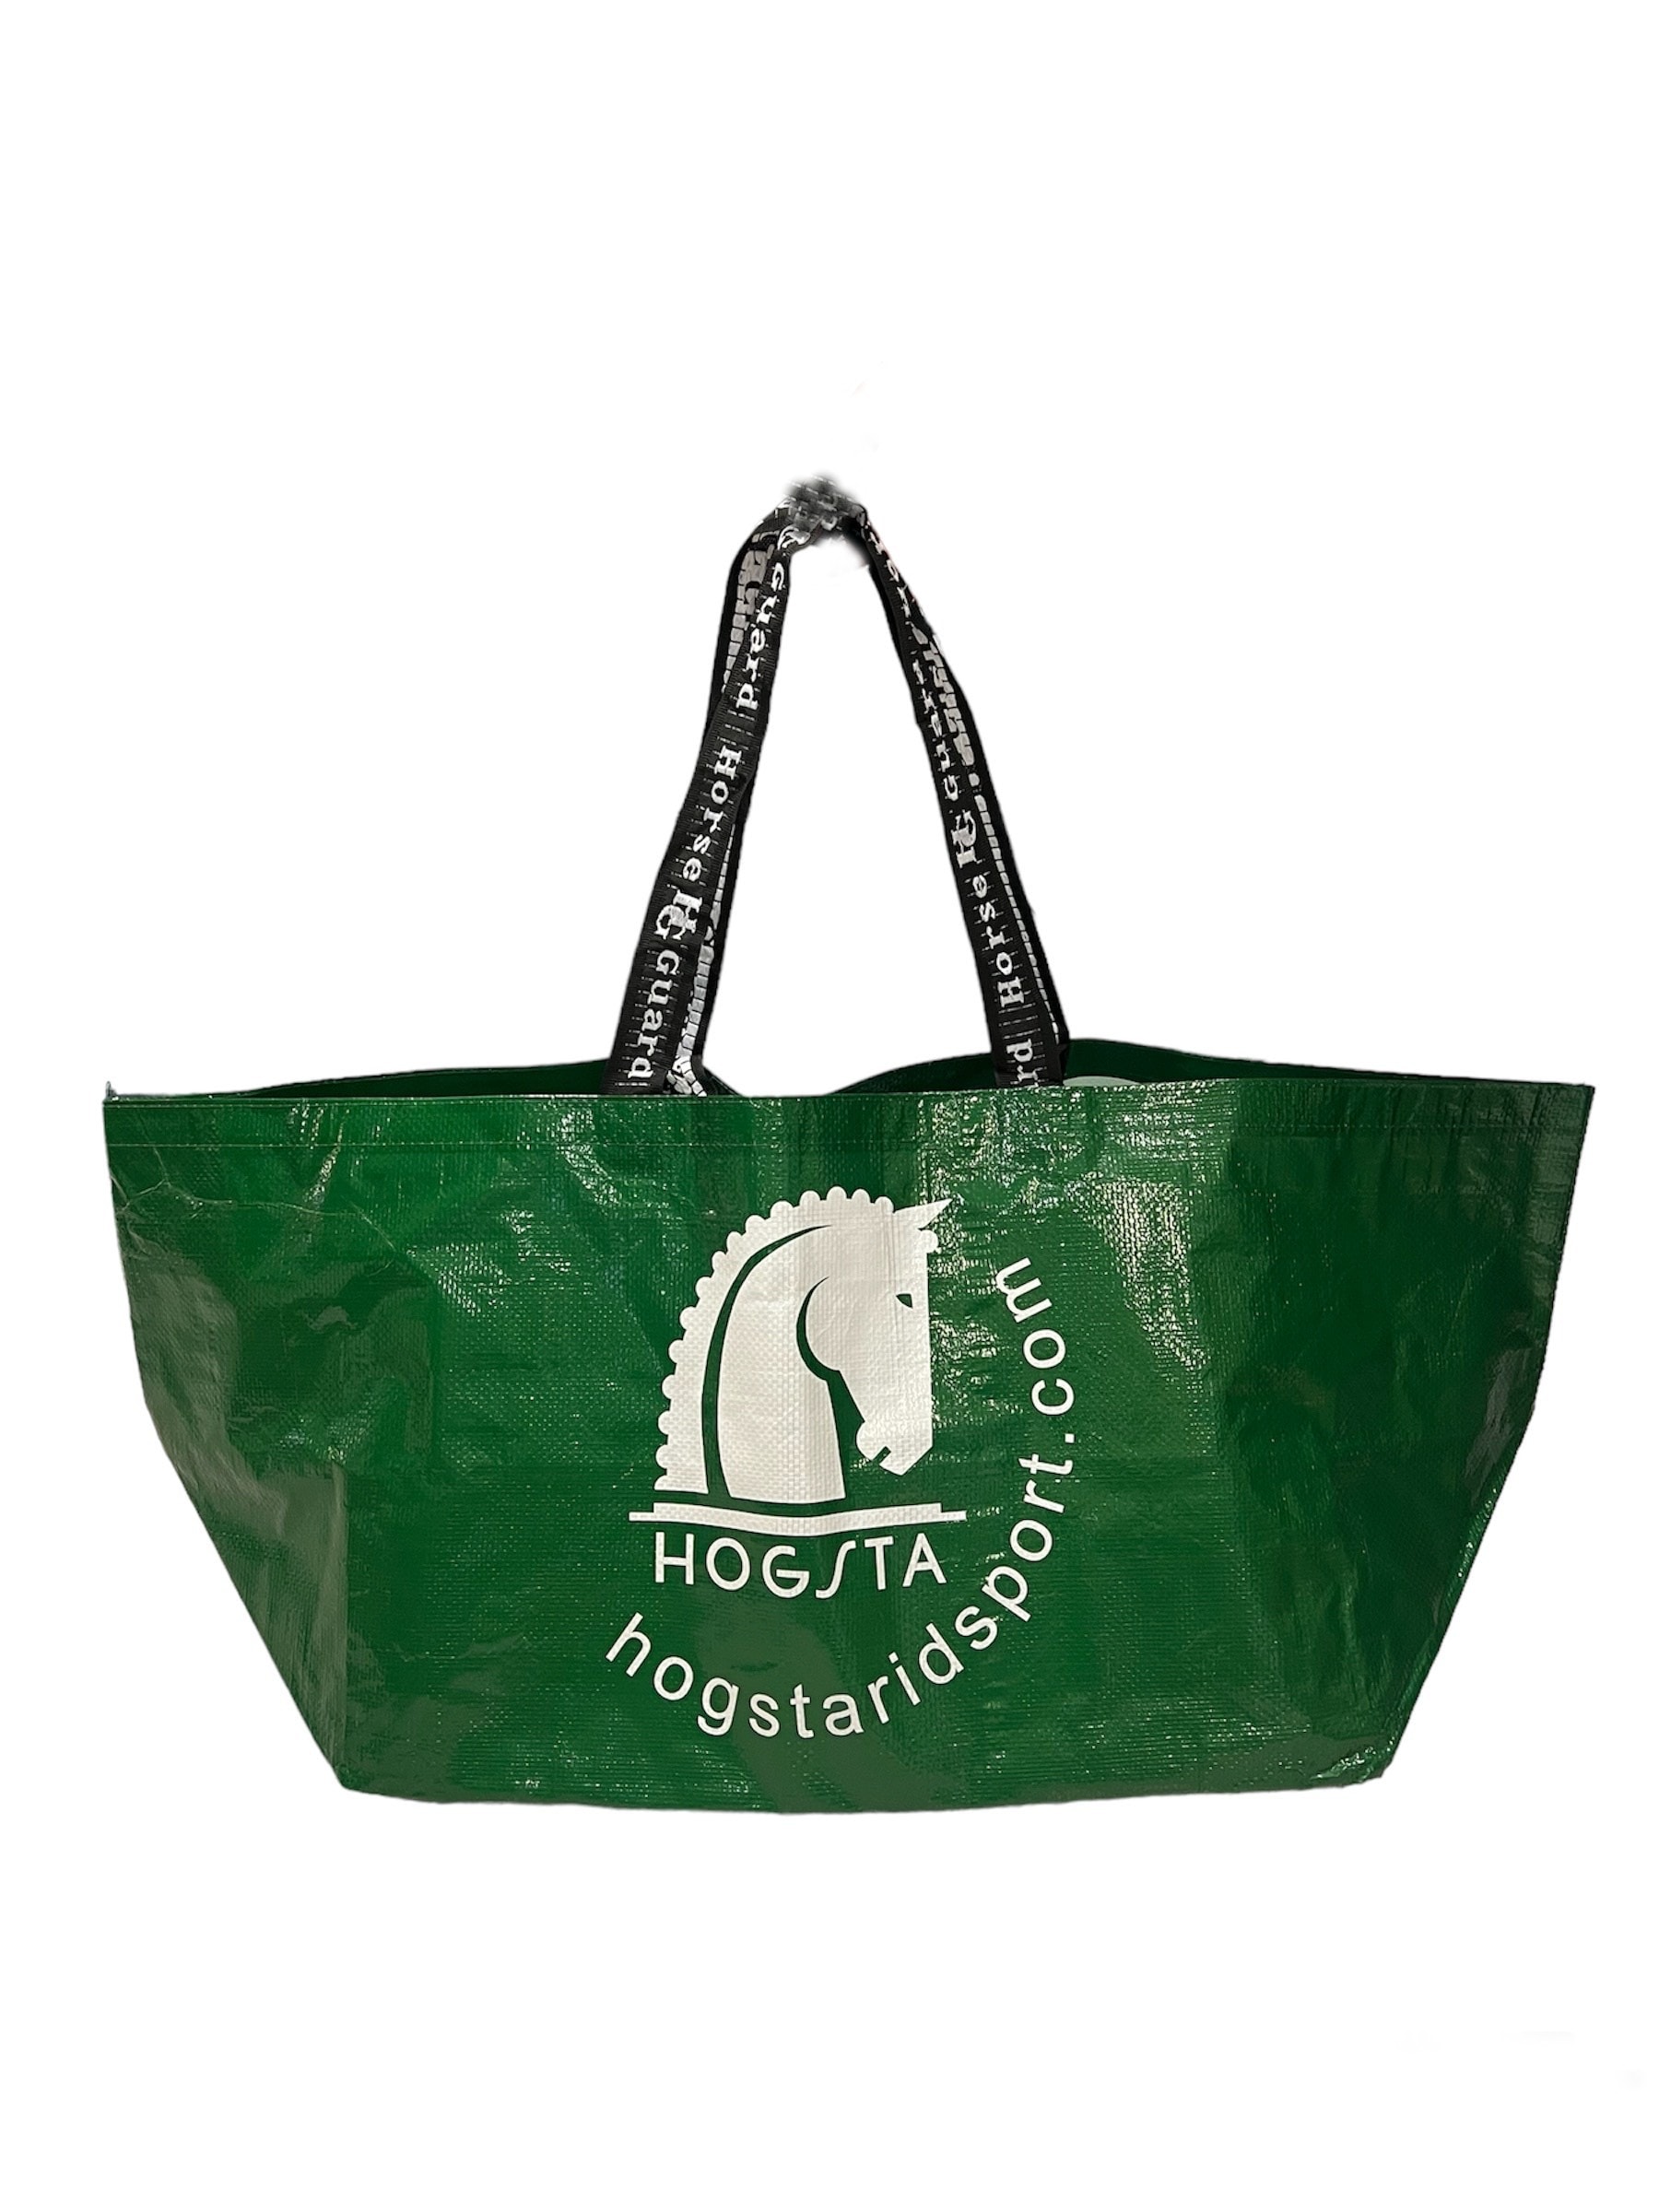 Hay/stable bag - Hogsta - Green